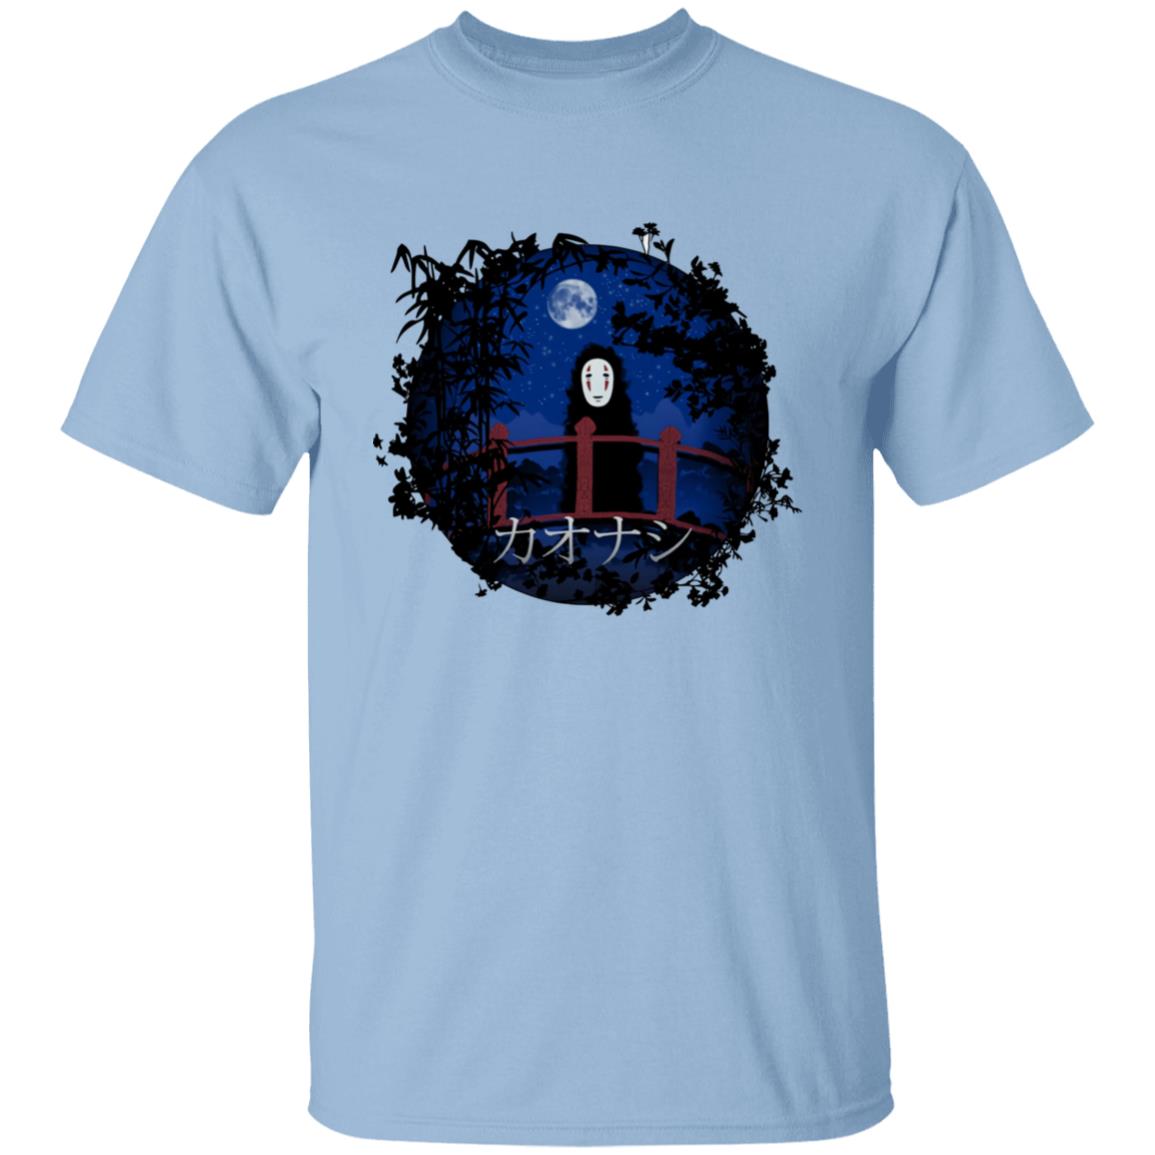 Spirited Away Kaonashi No Face by the blue Moon T Shirt